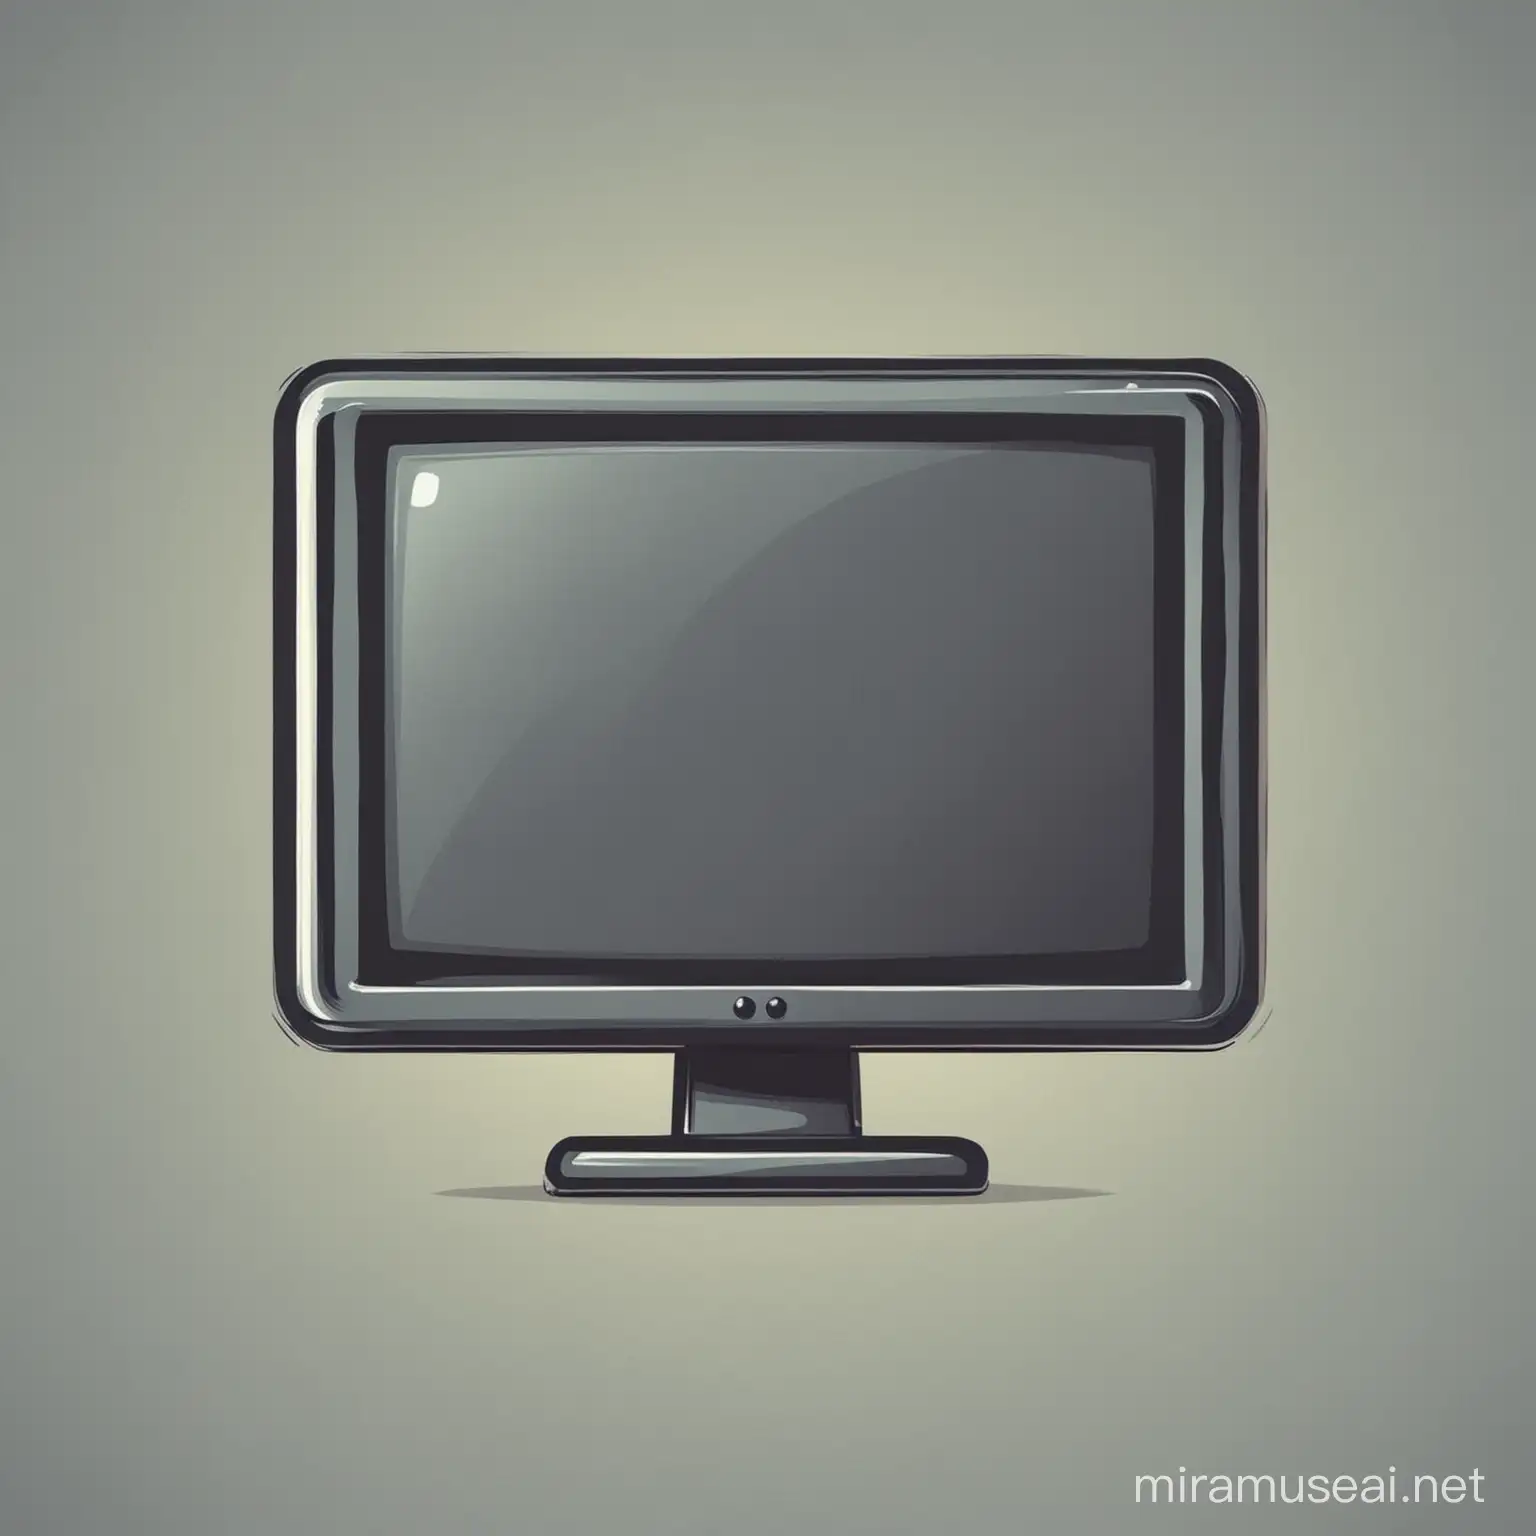 simplified computer monitor cartoon icon